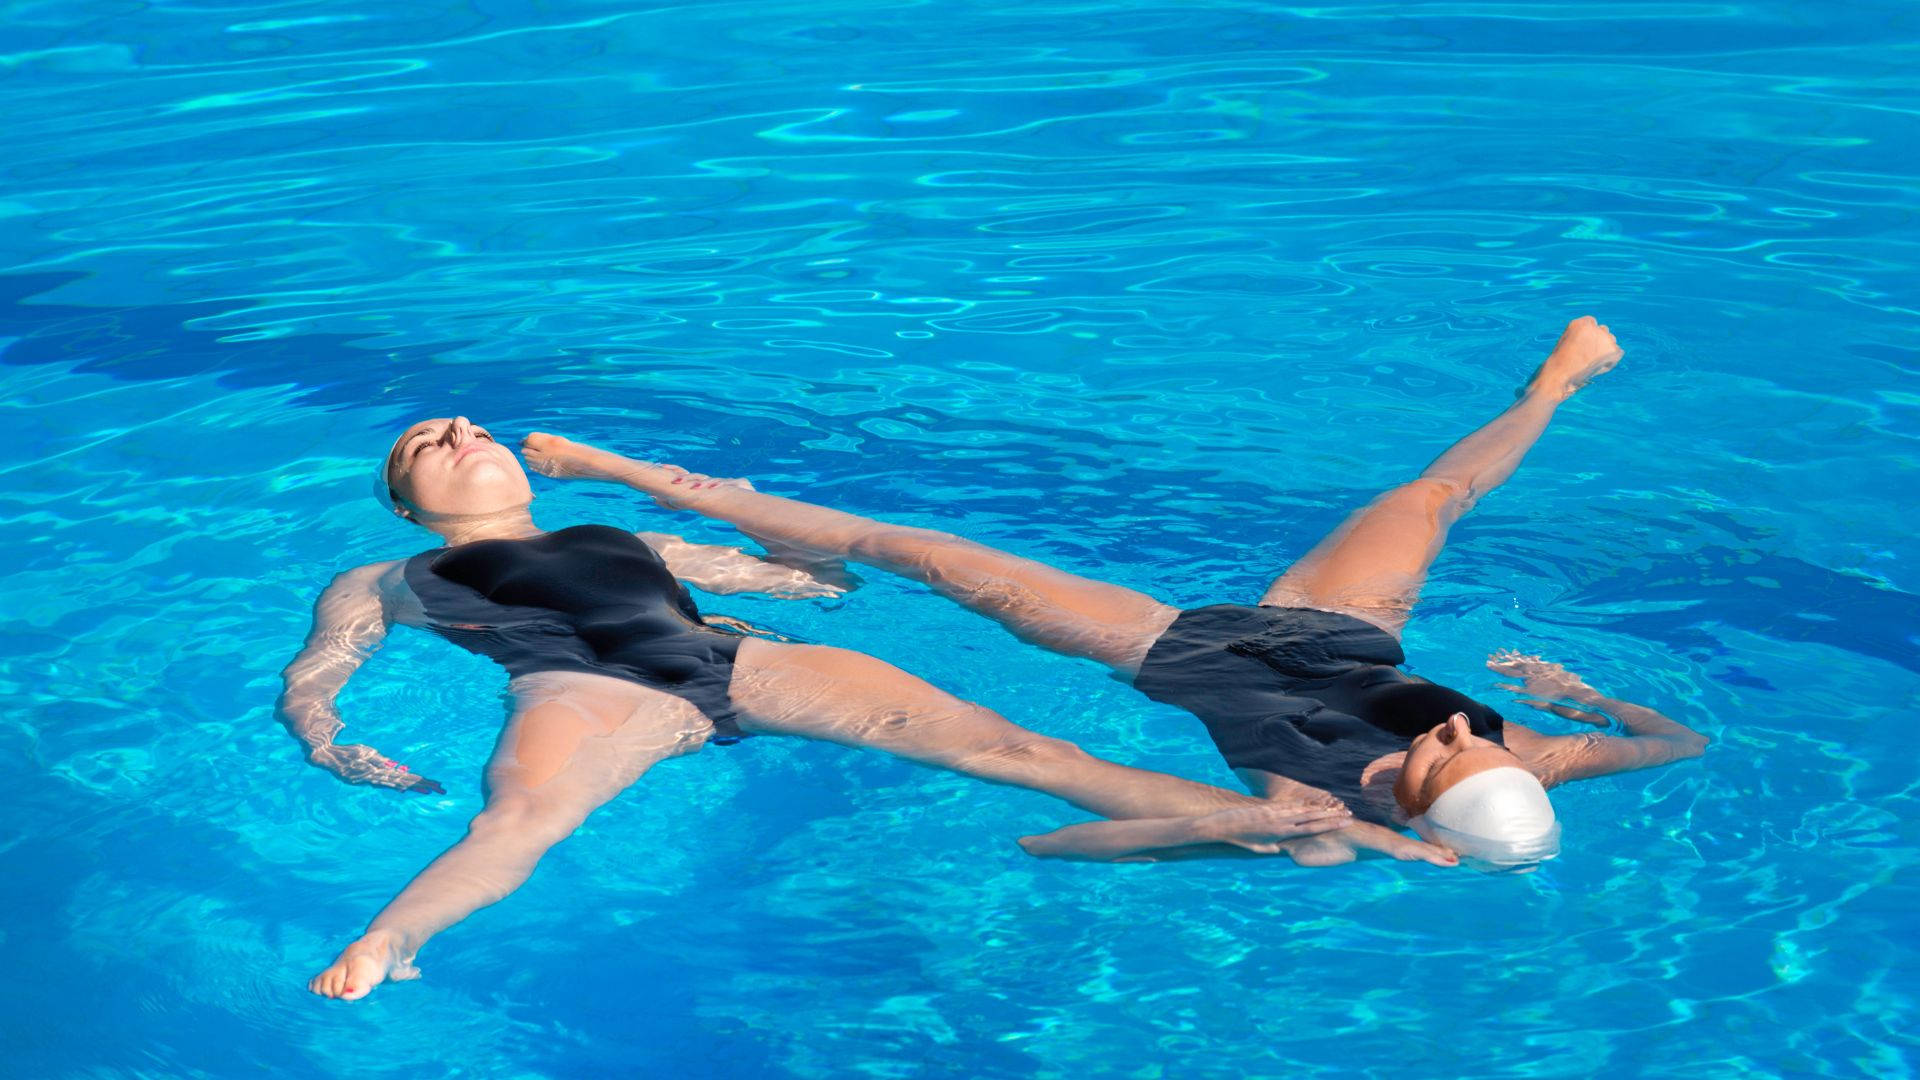 Leduc Silhouettes Artistic Swimming Wallpaper